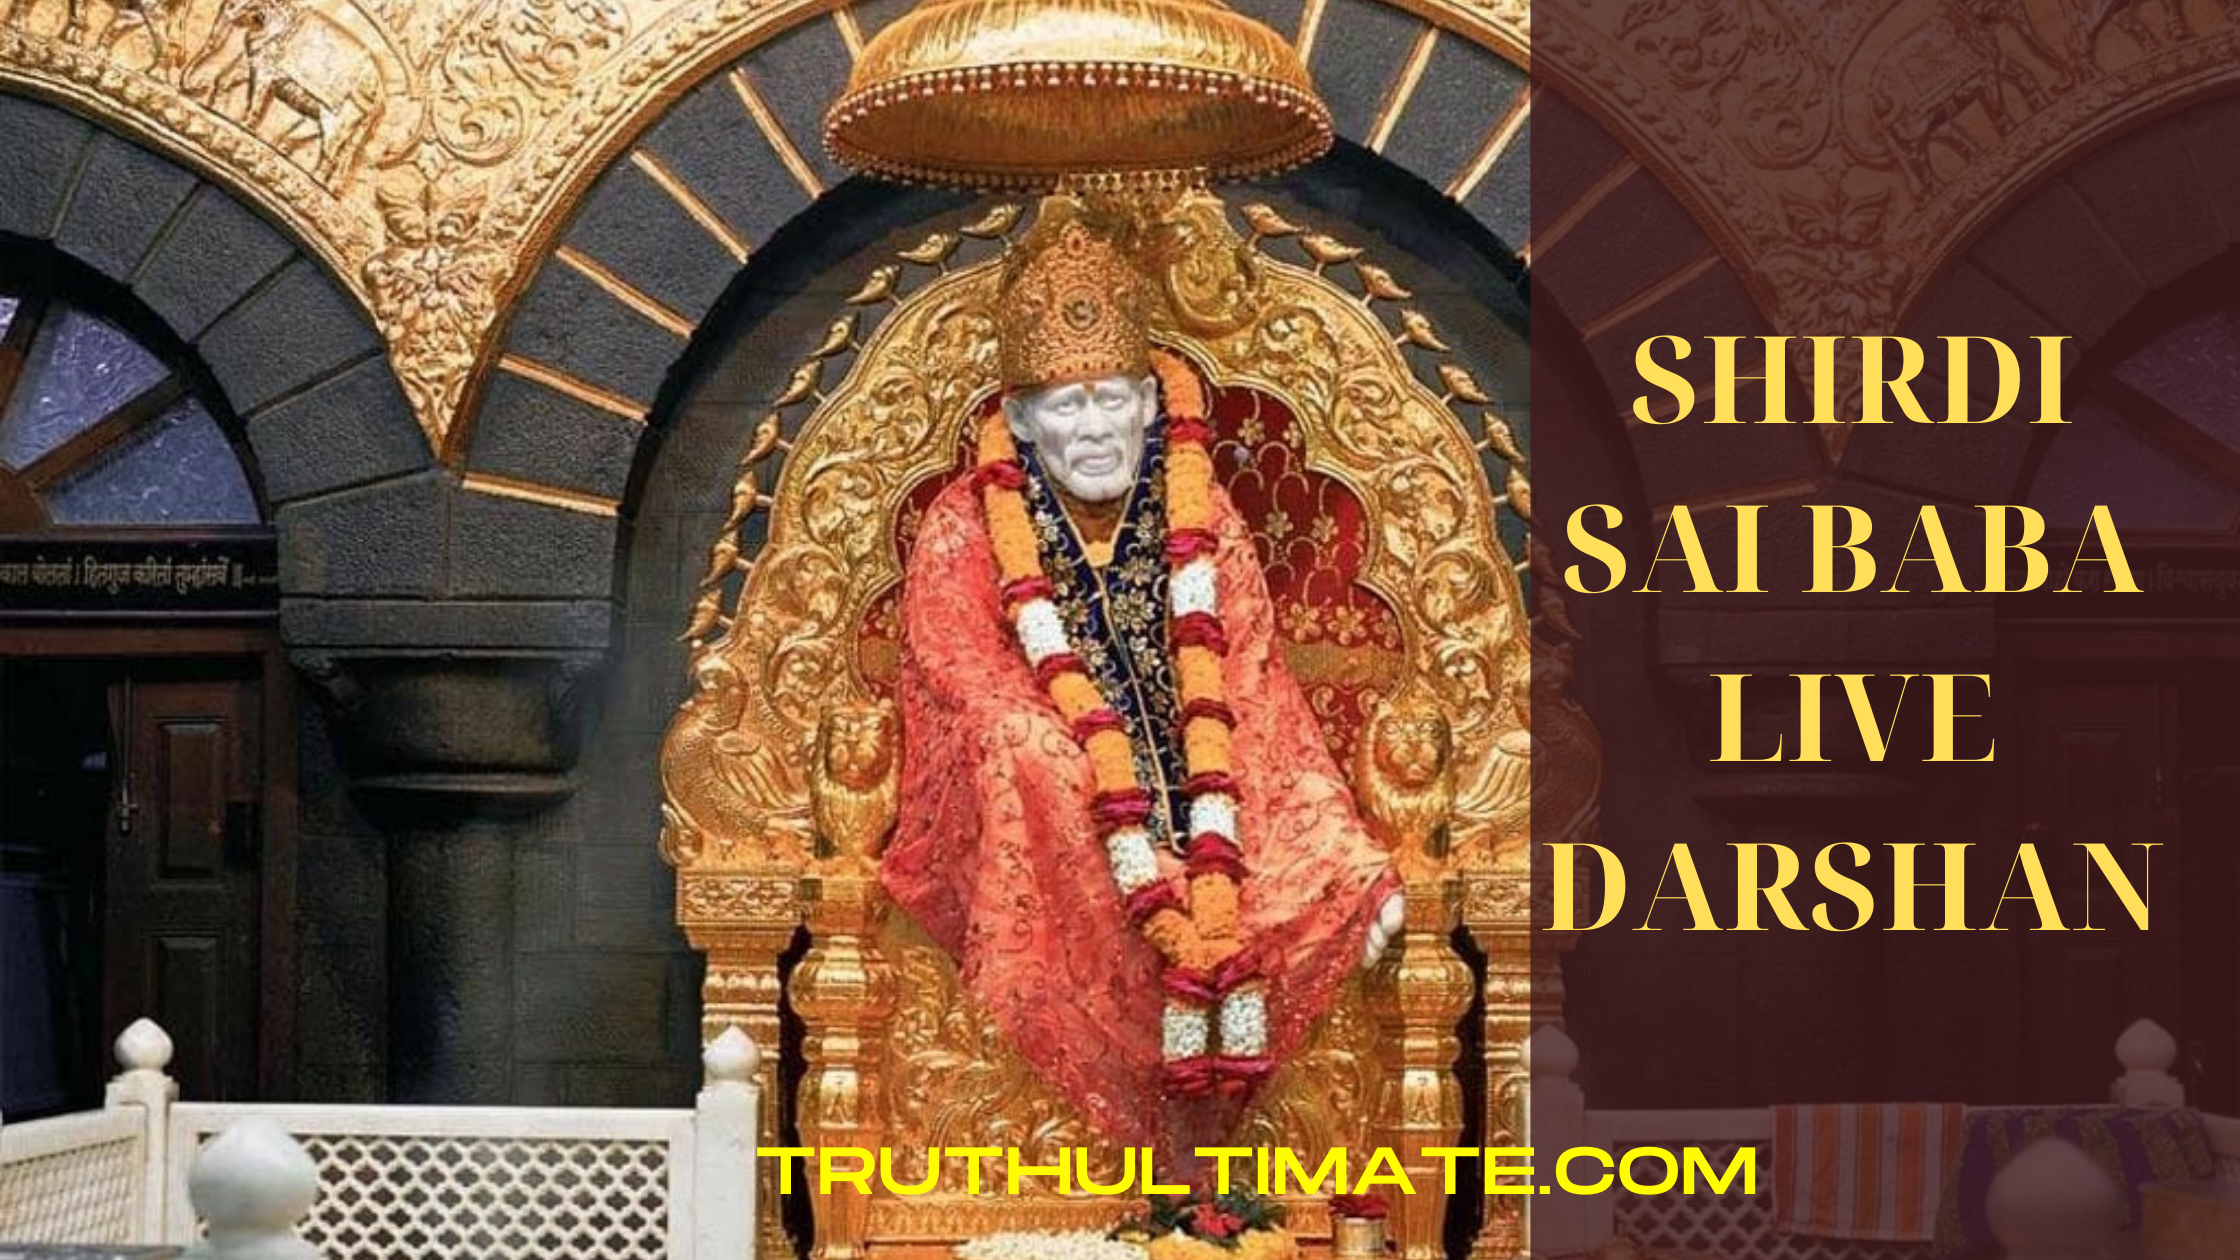 Shirdi Sai Baba Live Darshan - Truth Ultimate